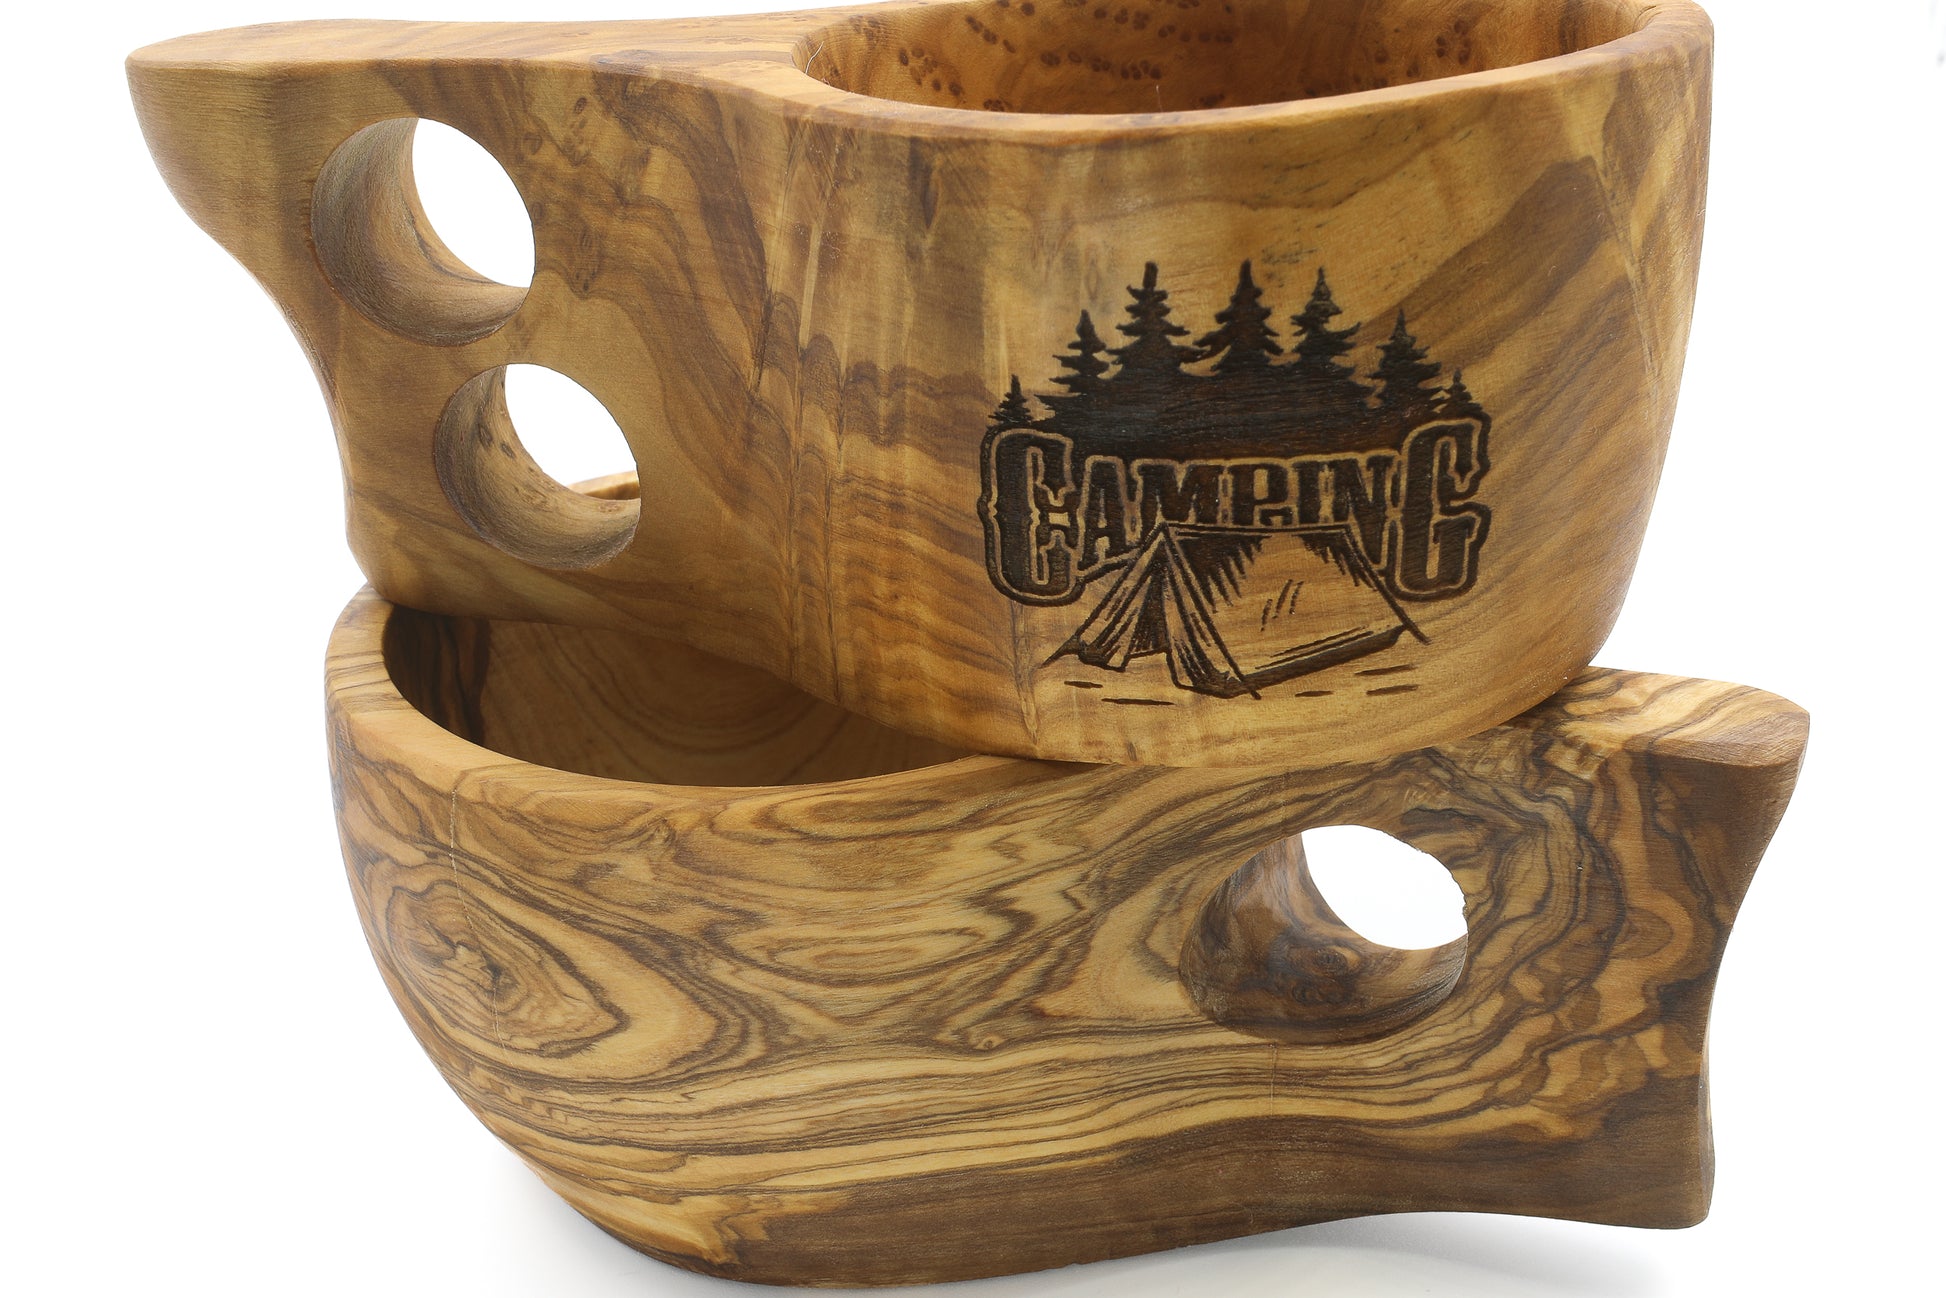 Elegant Scandinavian-style mug crafted from olive wood